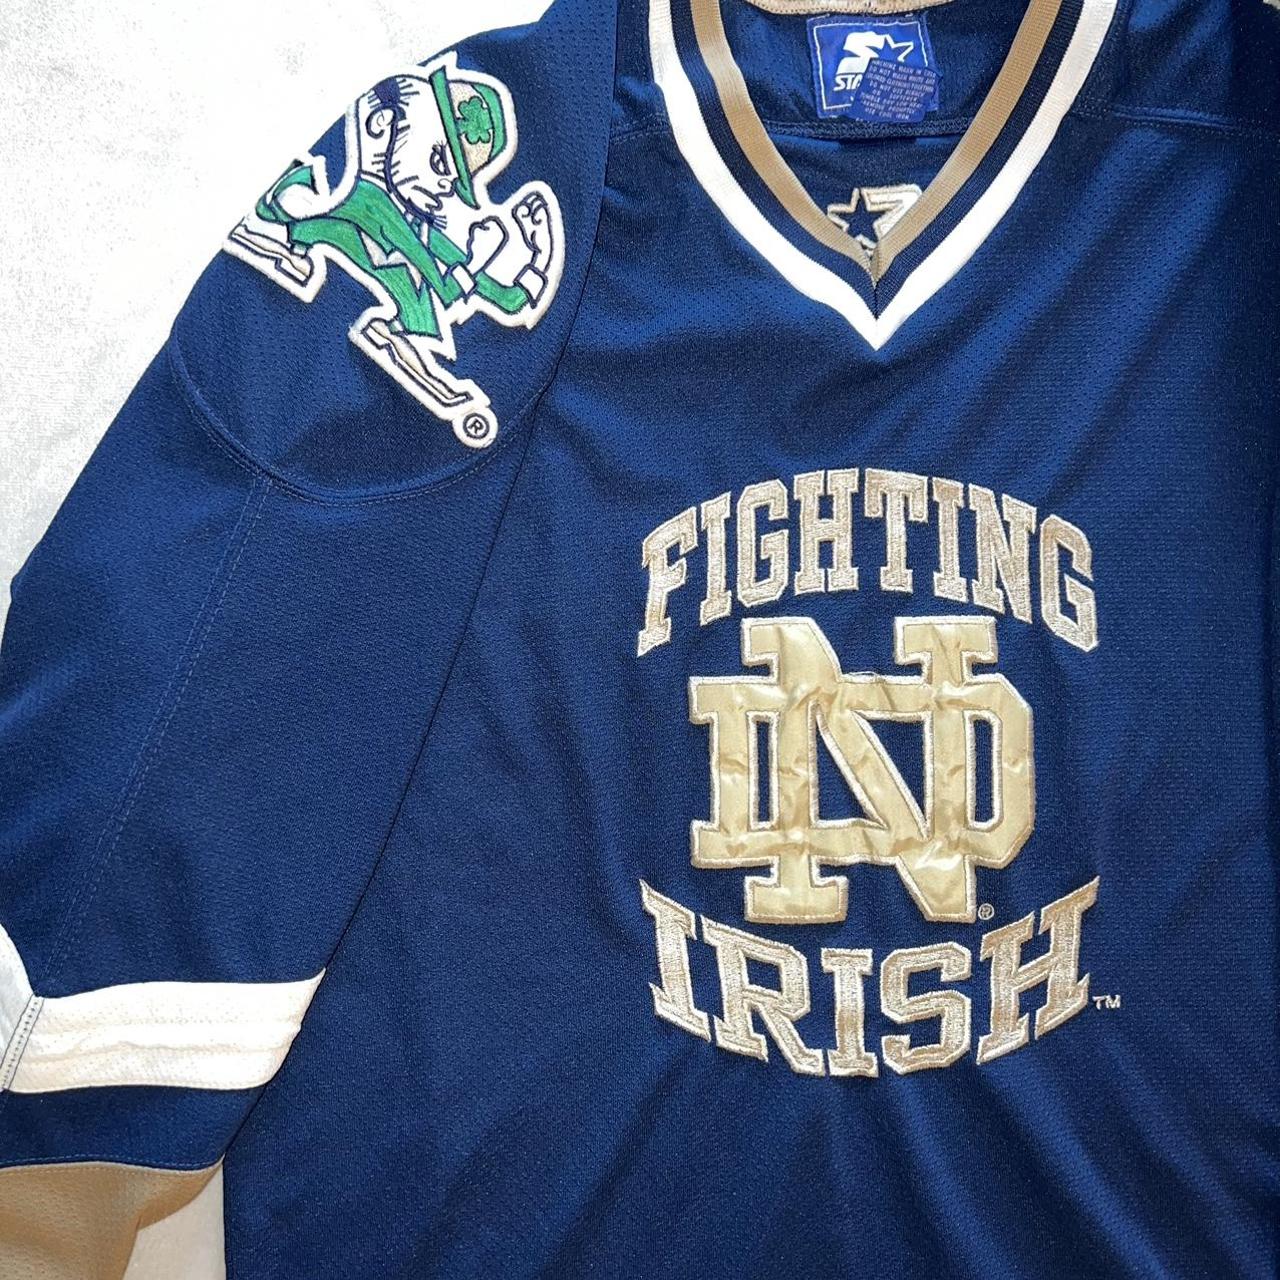 Sick Vintage 90s Notre Dame Hockey Jersey Made in - Depop